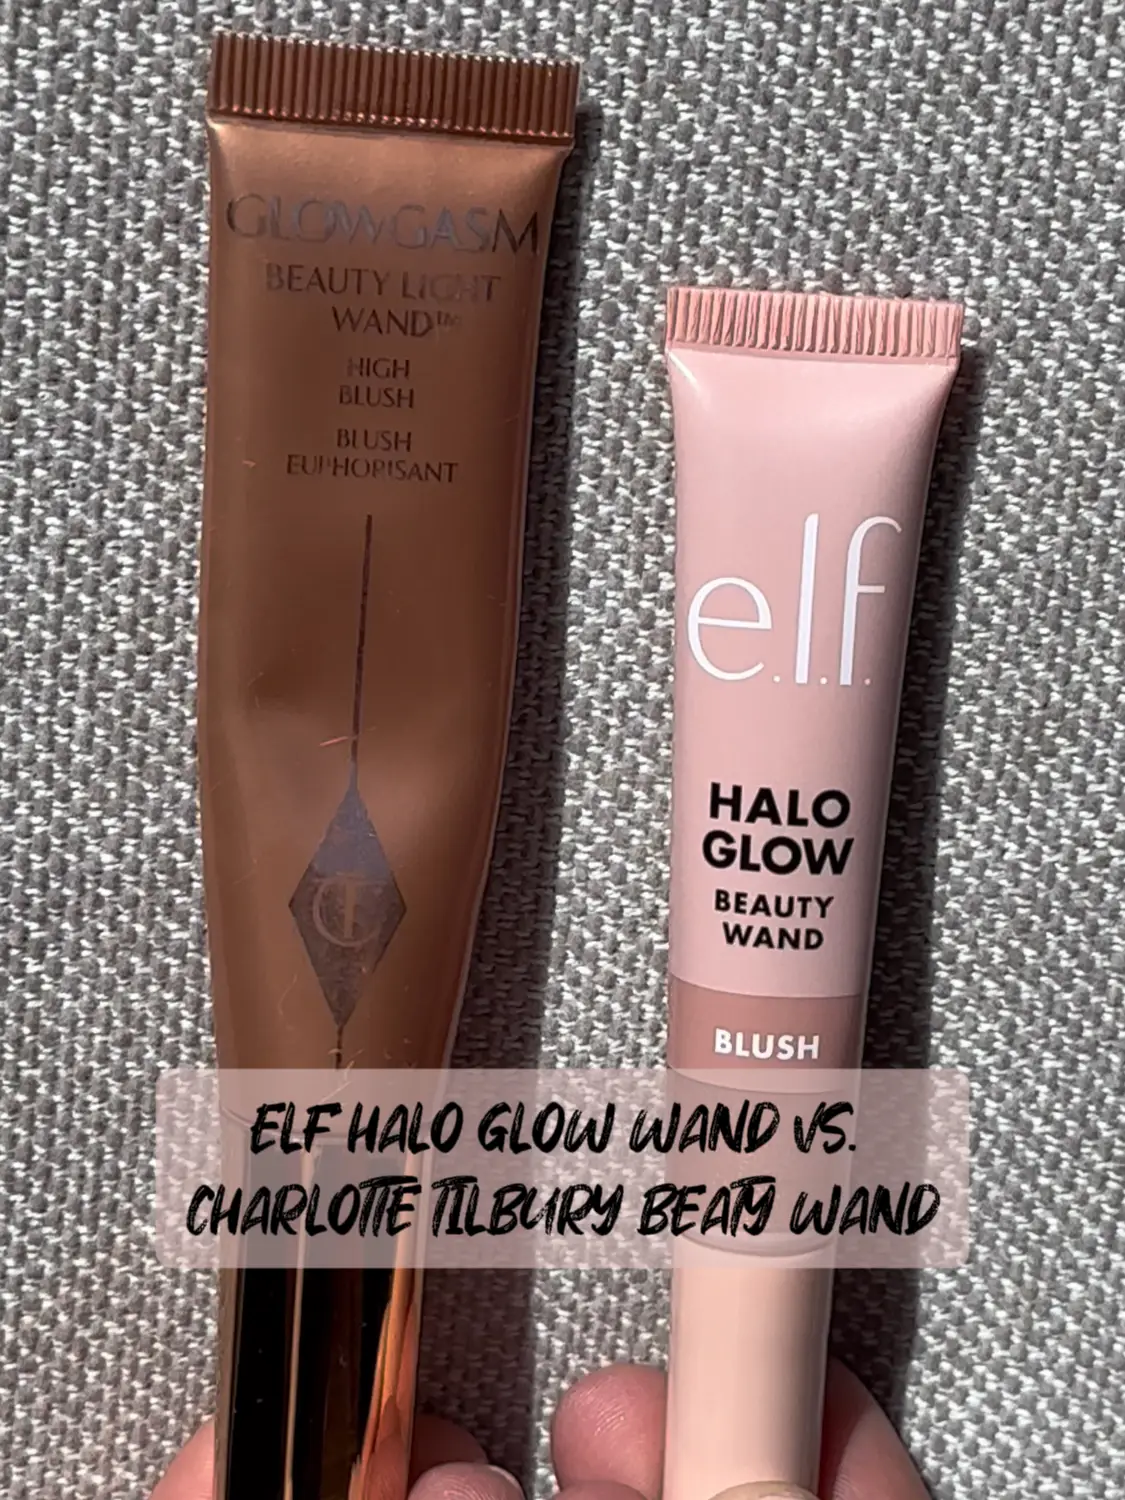 Newly released E.L.F. Halo Glow Beauty Wands dupes Charlotte Tilbury